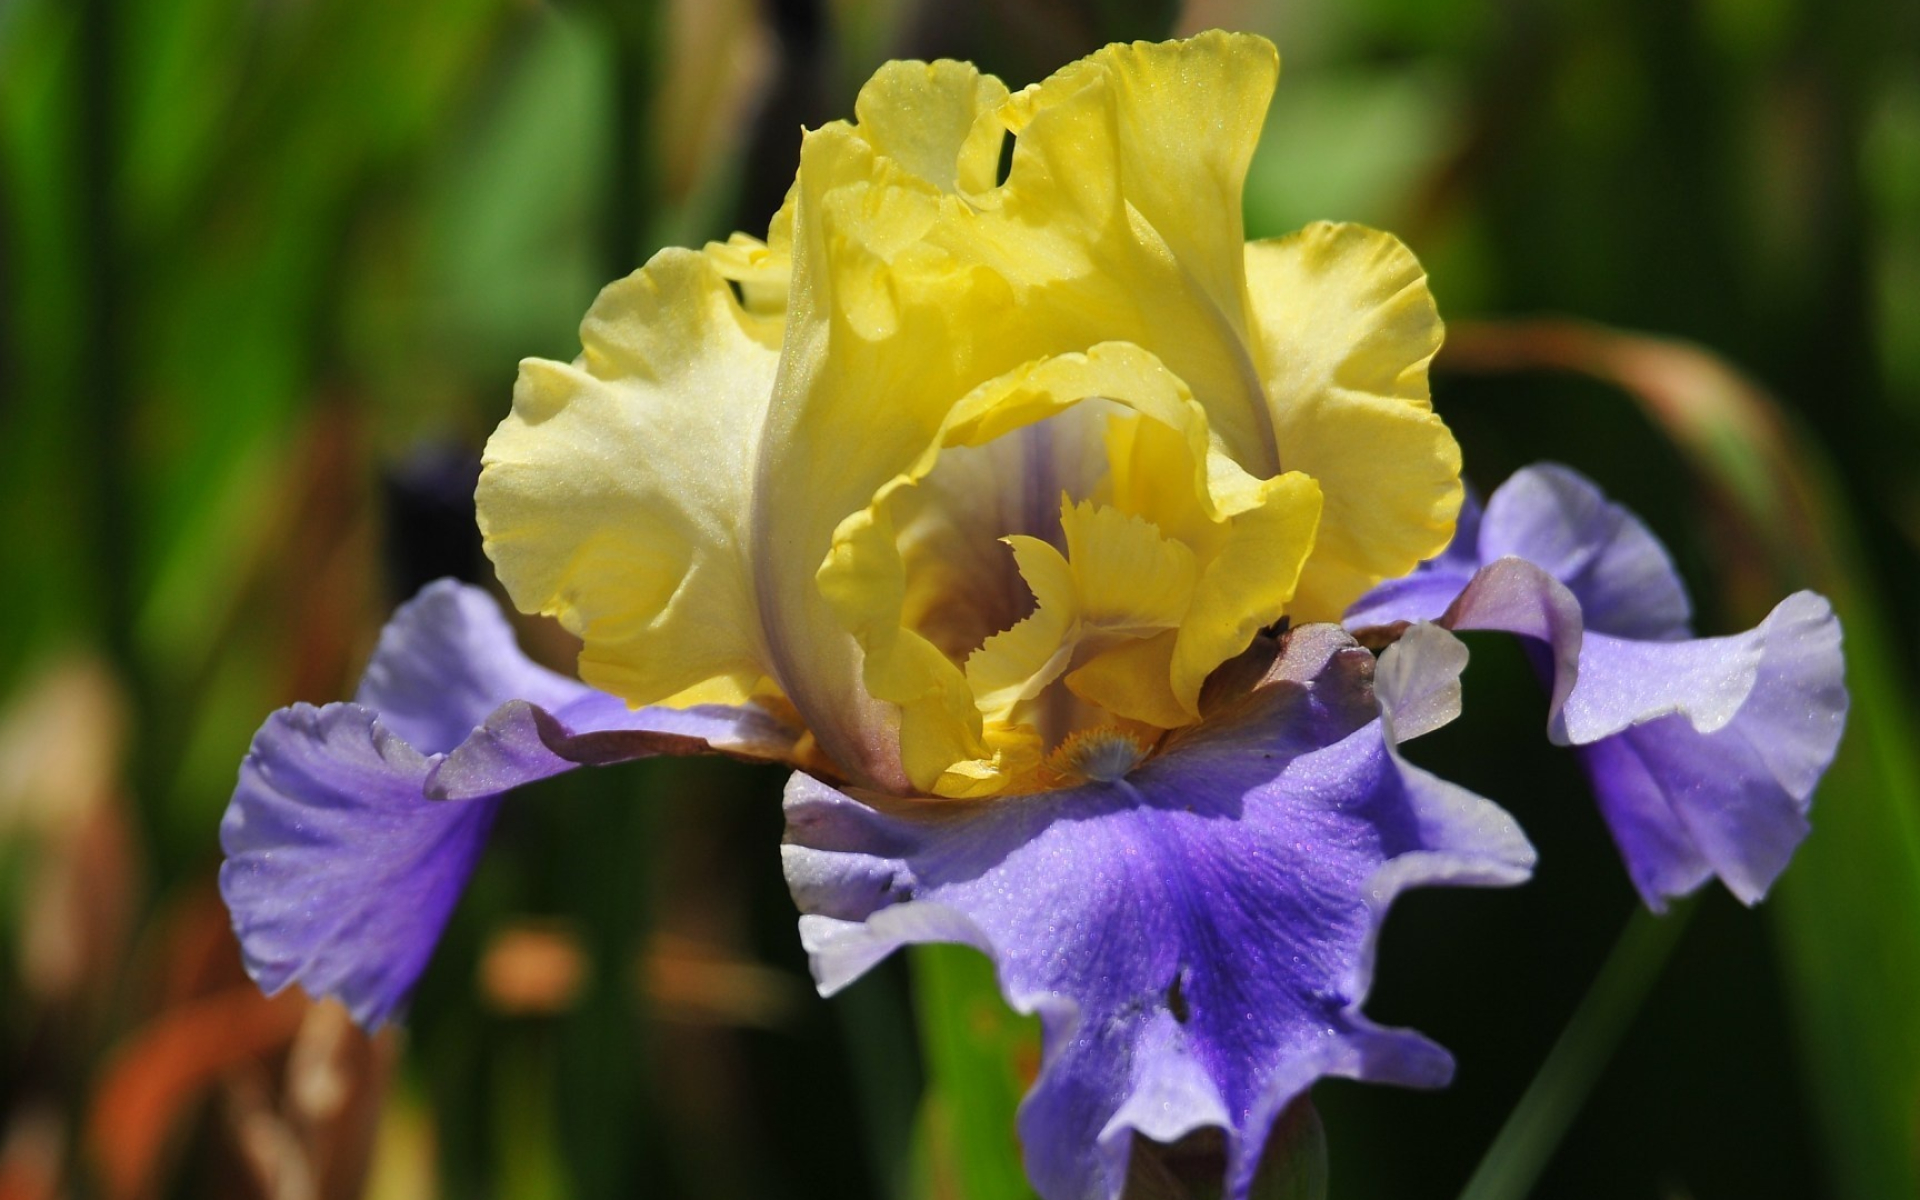 Iris flower wallpaper, Nature's delight, Blossoming beauty, Colorful petals, 1920x1200 HD Desktop